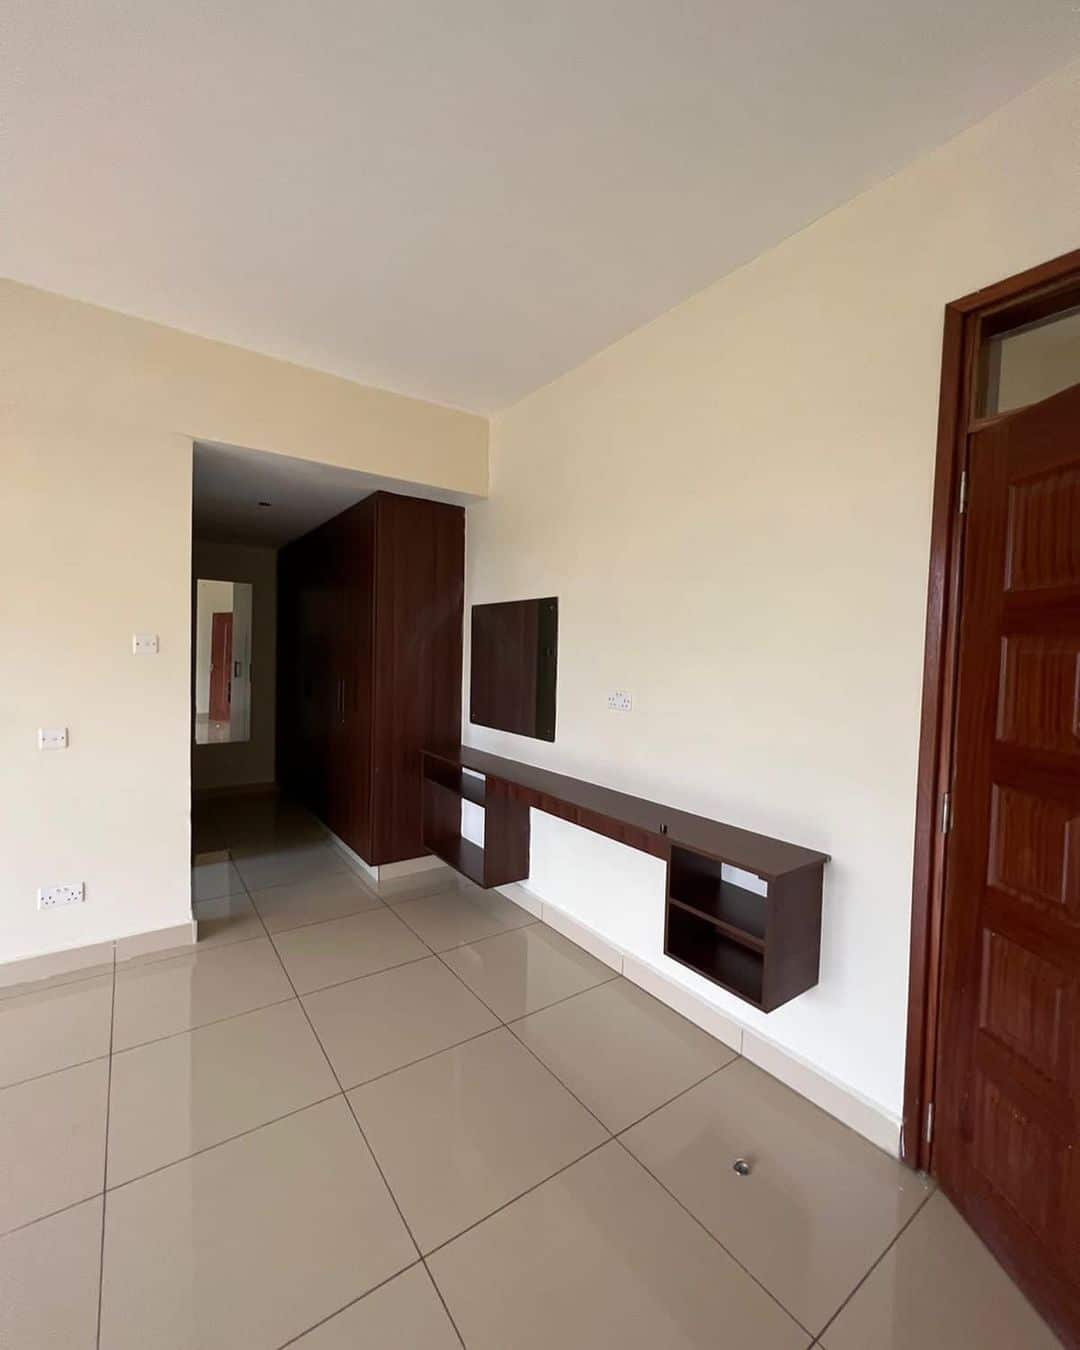 Westlands, Nairobi 3 bedroom apartment all en suite. Musilli Homes